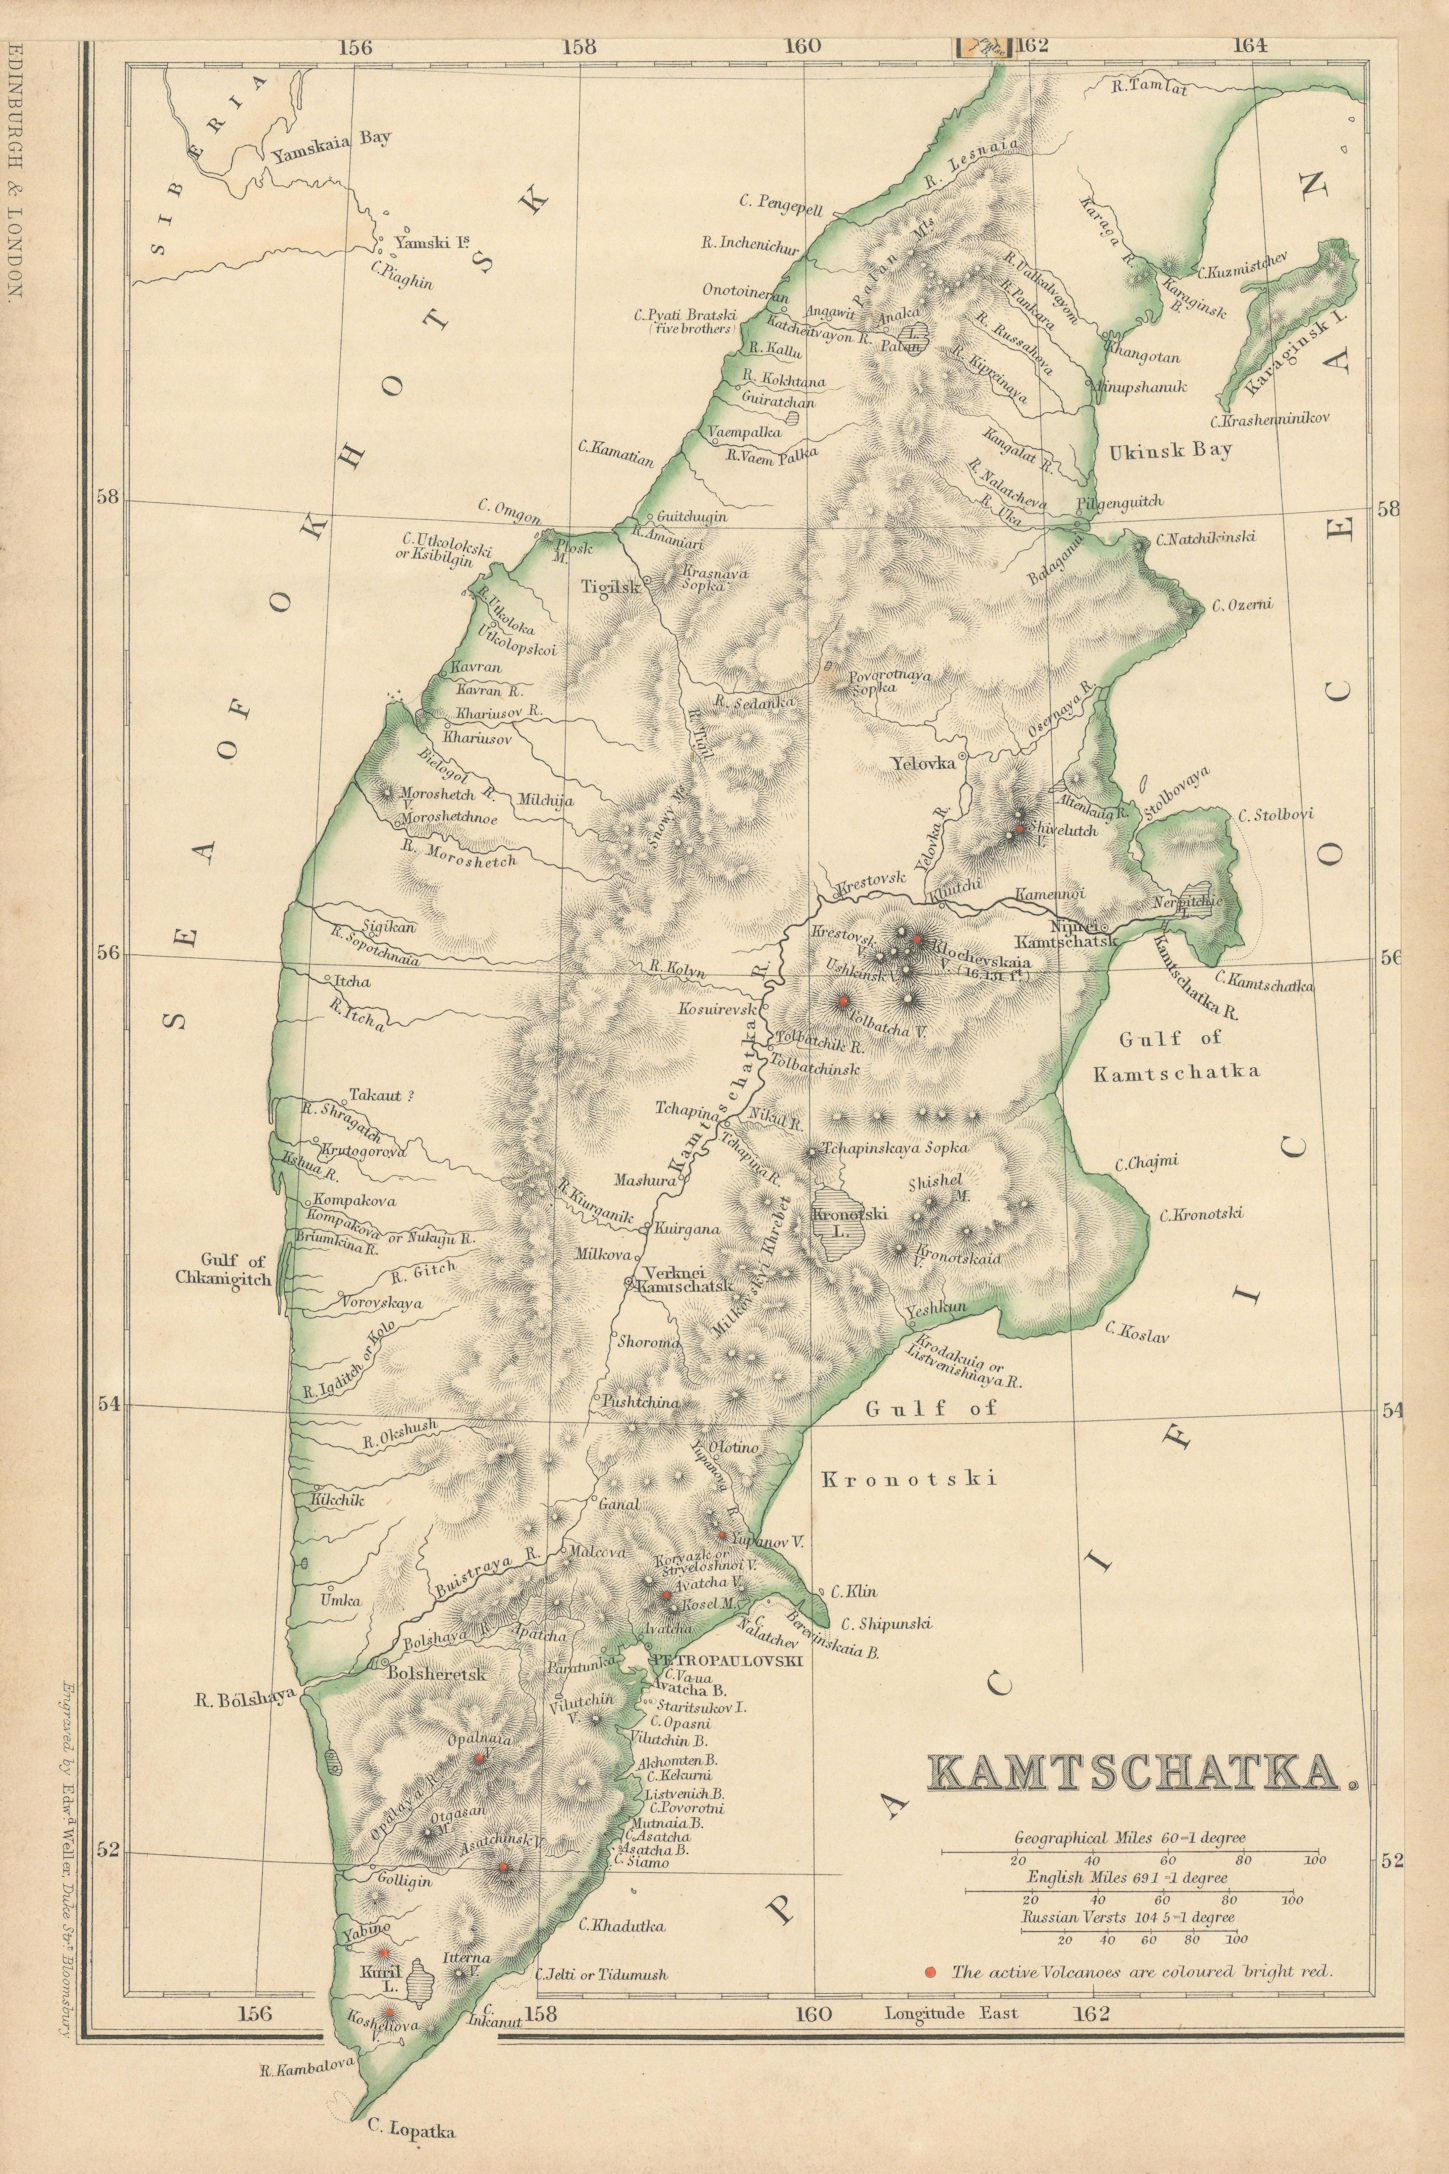 Associate Product Kamchatka 'Kamtschatka' showing active volcanoes. WELLER 1860 old antique map